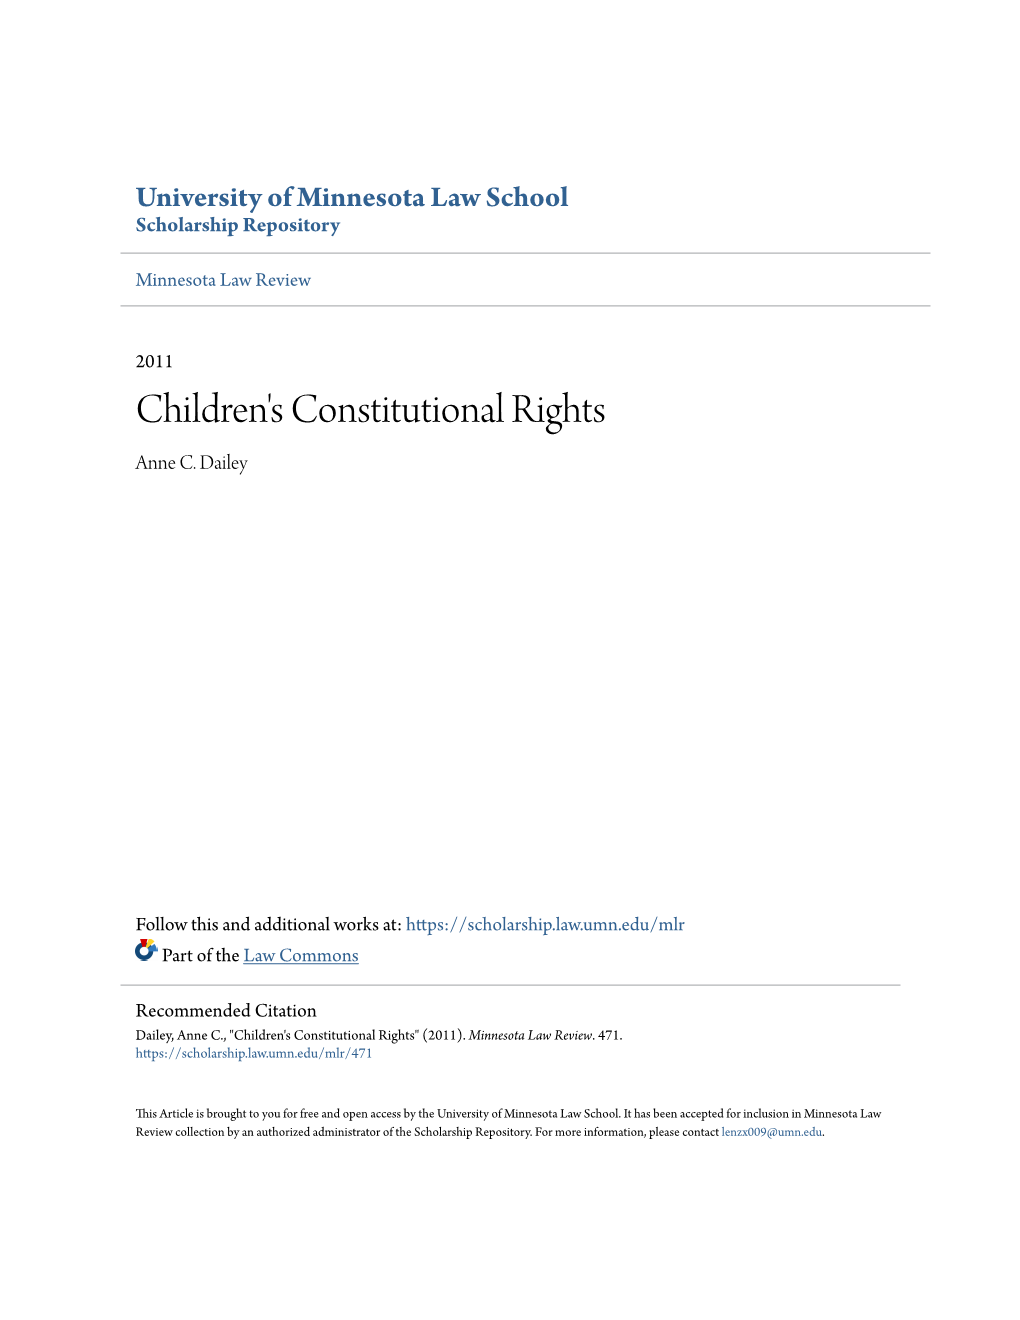 Children's Constitutional Rights Anne C